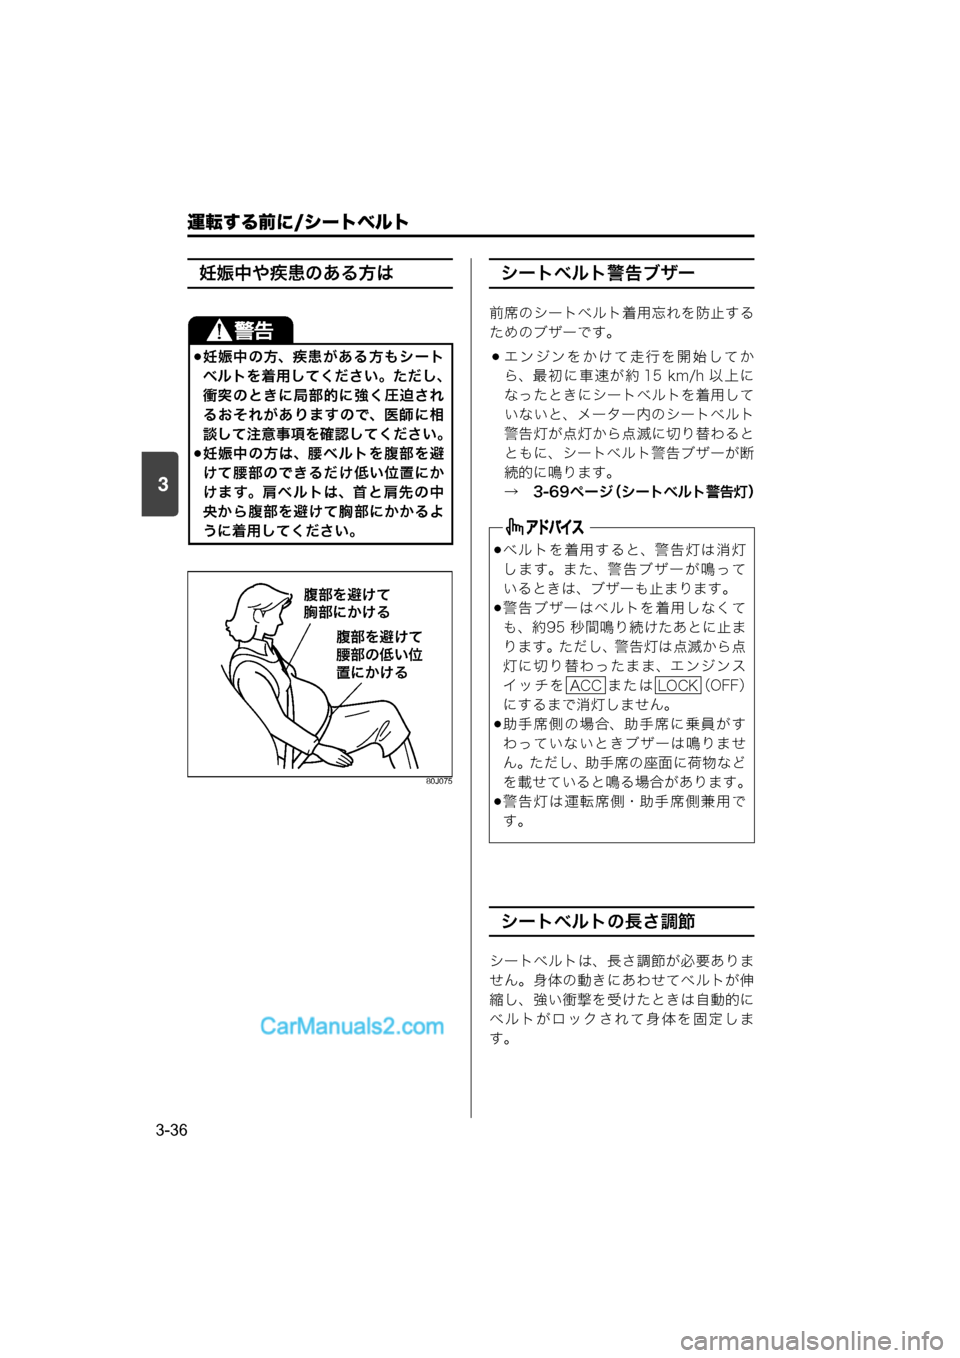 MAZDA MODEL CARROL 2015  取扱説明書 (キャロル) (in Japanese) 運転する前に/シートベルト
3-36
3
妊娠中や疾患のある方は
80J075
シートベルト警告ブザー
前席のシートベルト着用忘れを防止する
ためのブザーです�